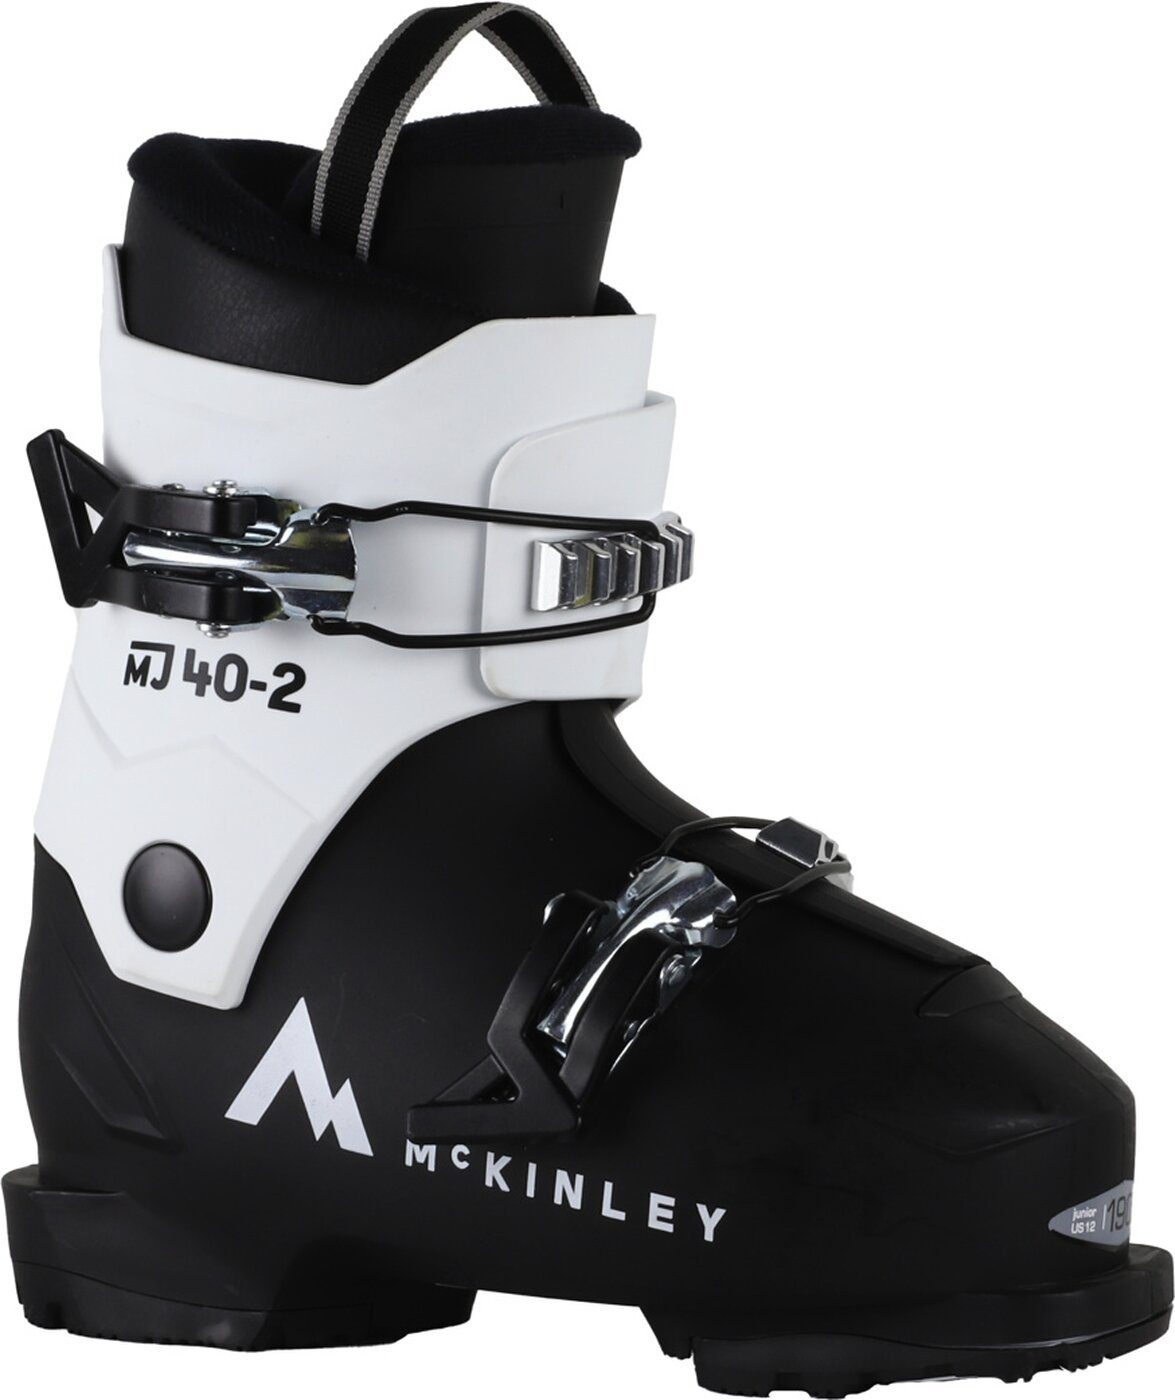 McKINLEY Ki.-Skistiefel MJ40-2 GW Skischuh